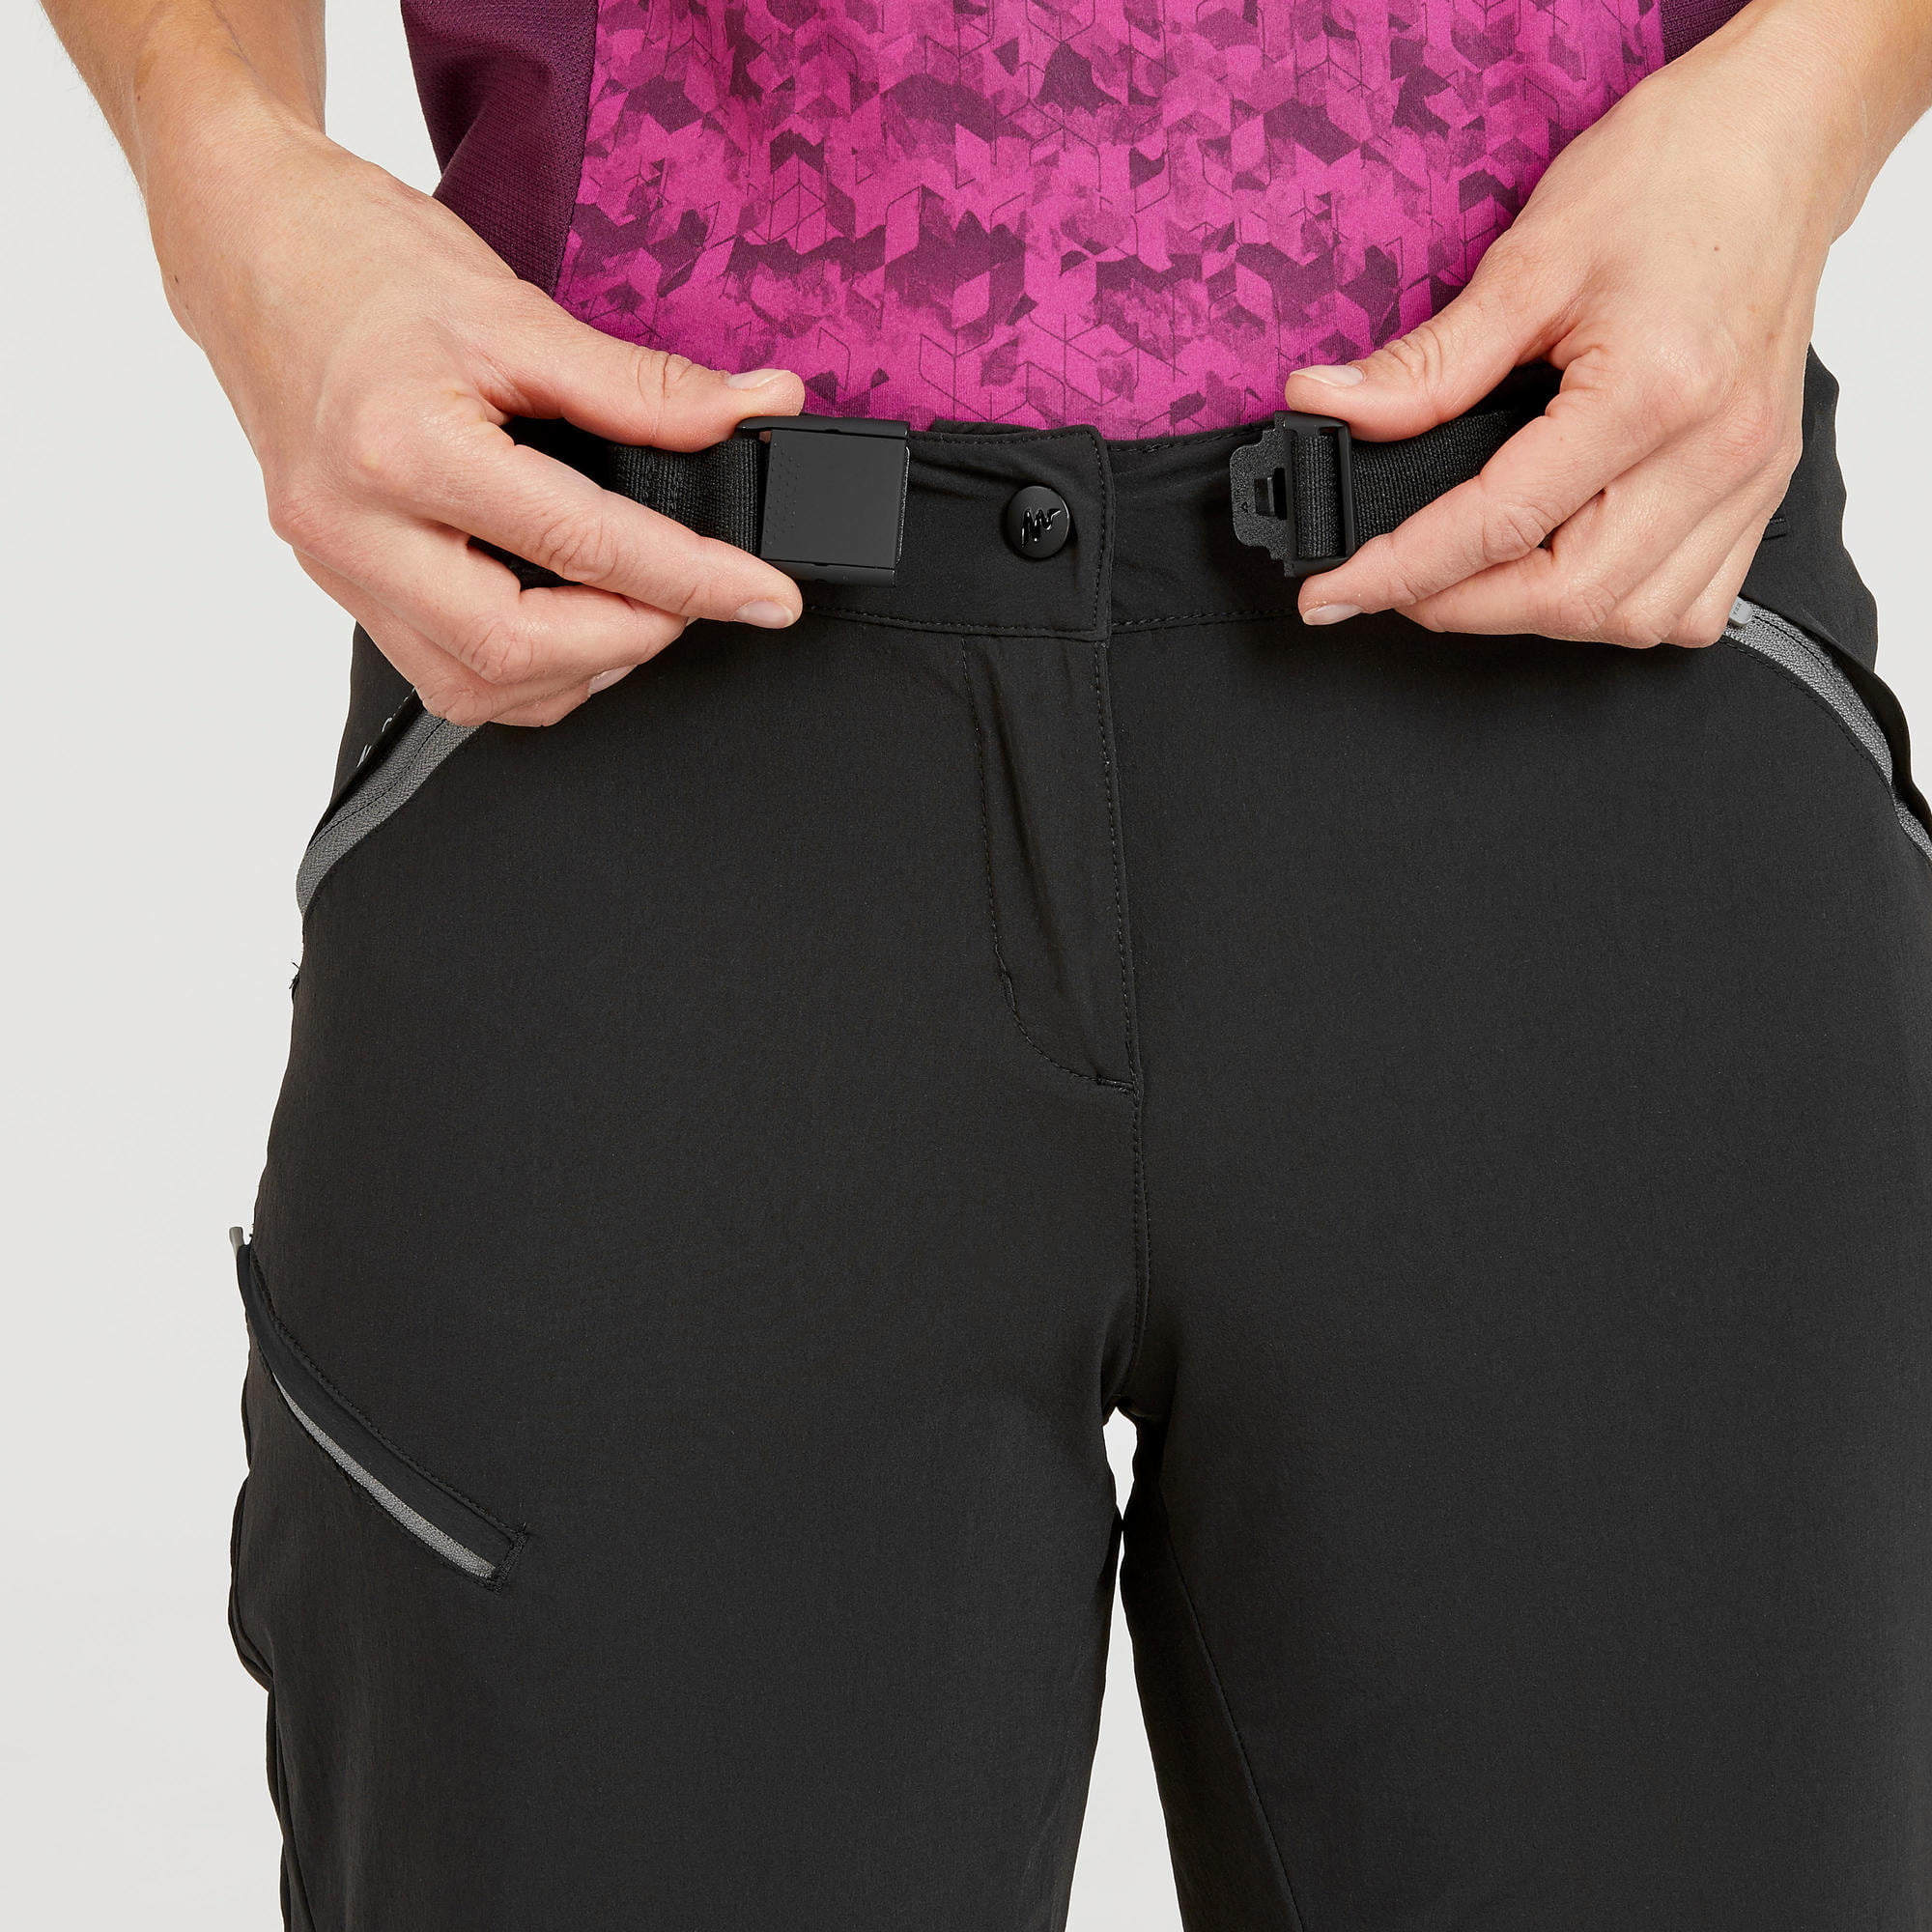 Buy Men Polyester Non-Stretchable Gym Track Pants Black Online Decathlon |  islamiyyat.com